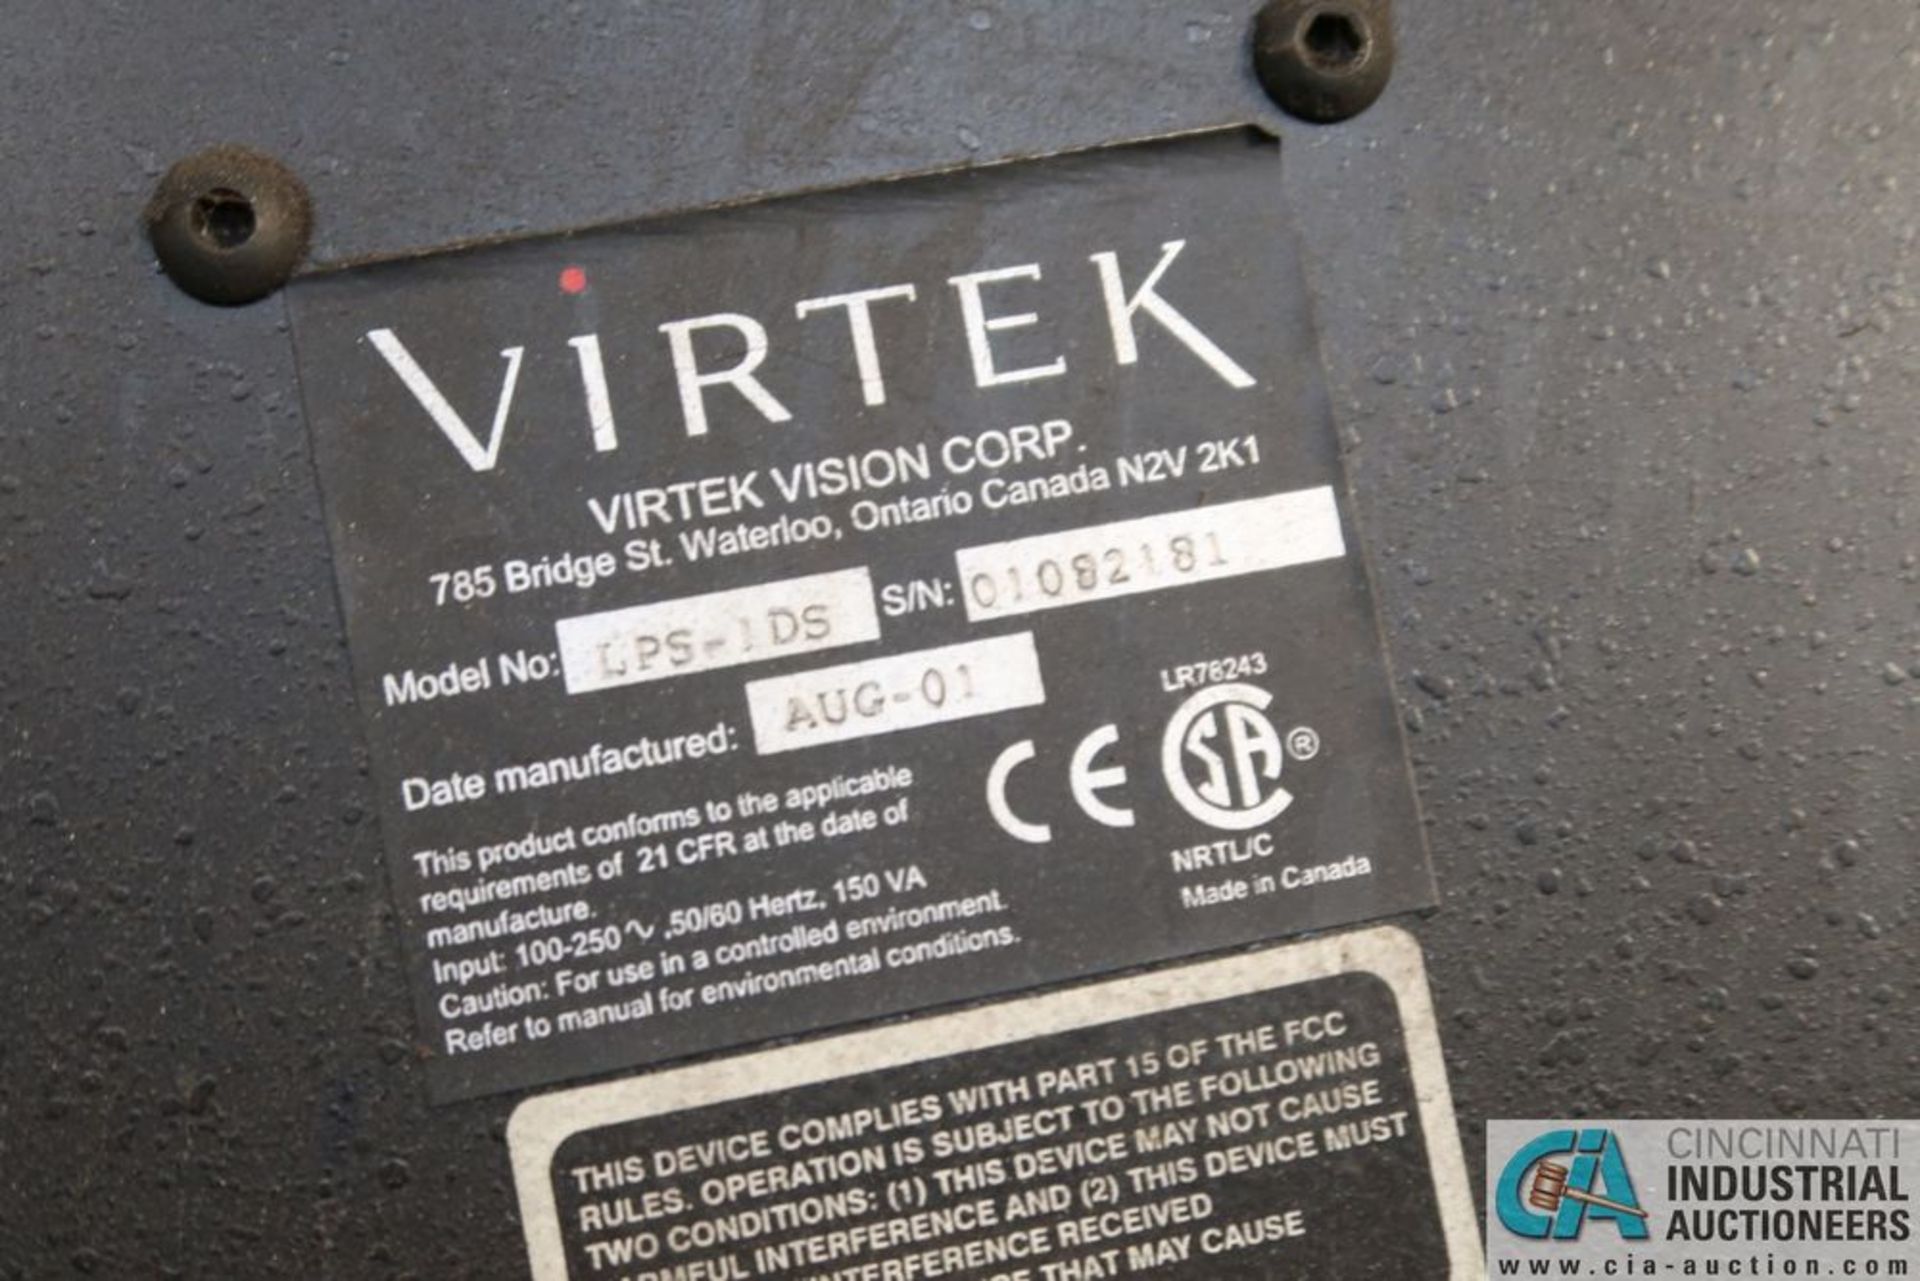 VIRTEK MODEL LPS-1DS LASER QC LASER SCAN INSPECTION MACHINE; S/N 01082181 (NEW 8-2001), WITH - Image 12 of 12